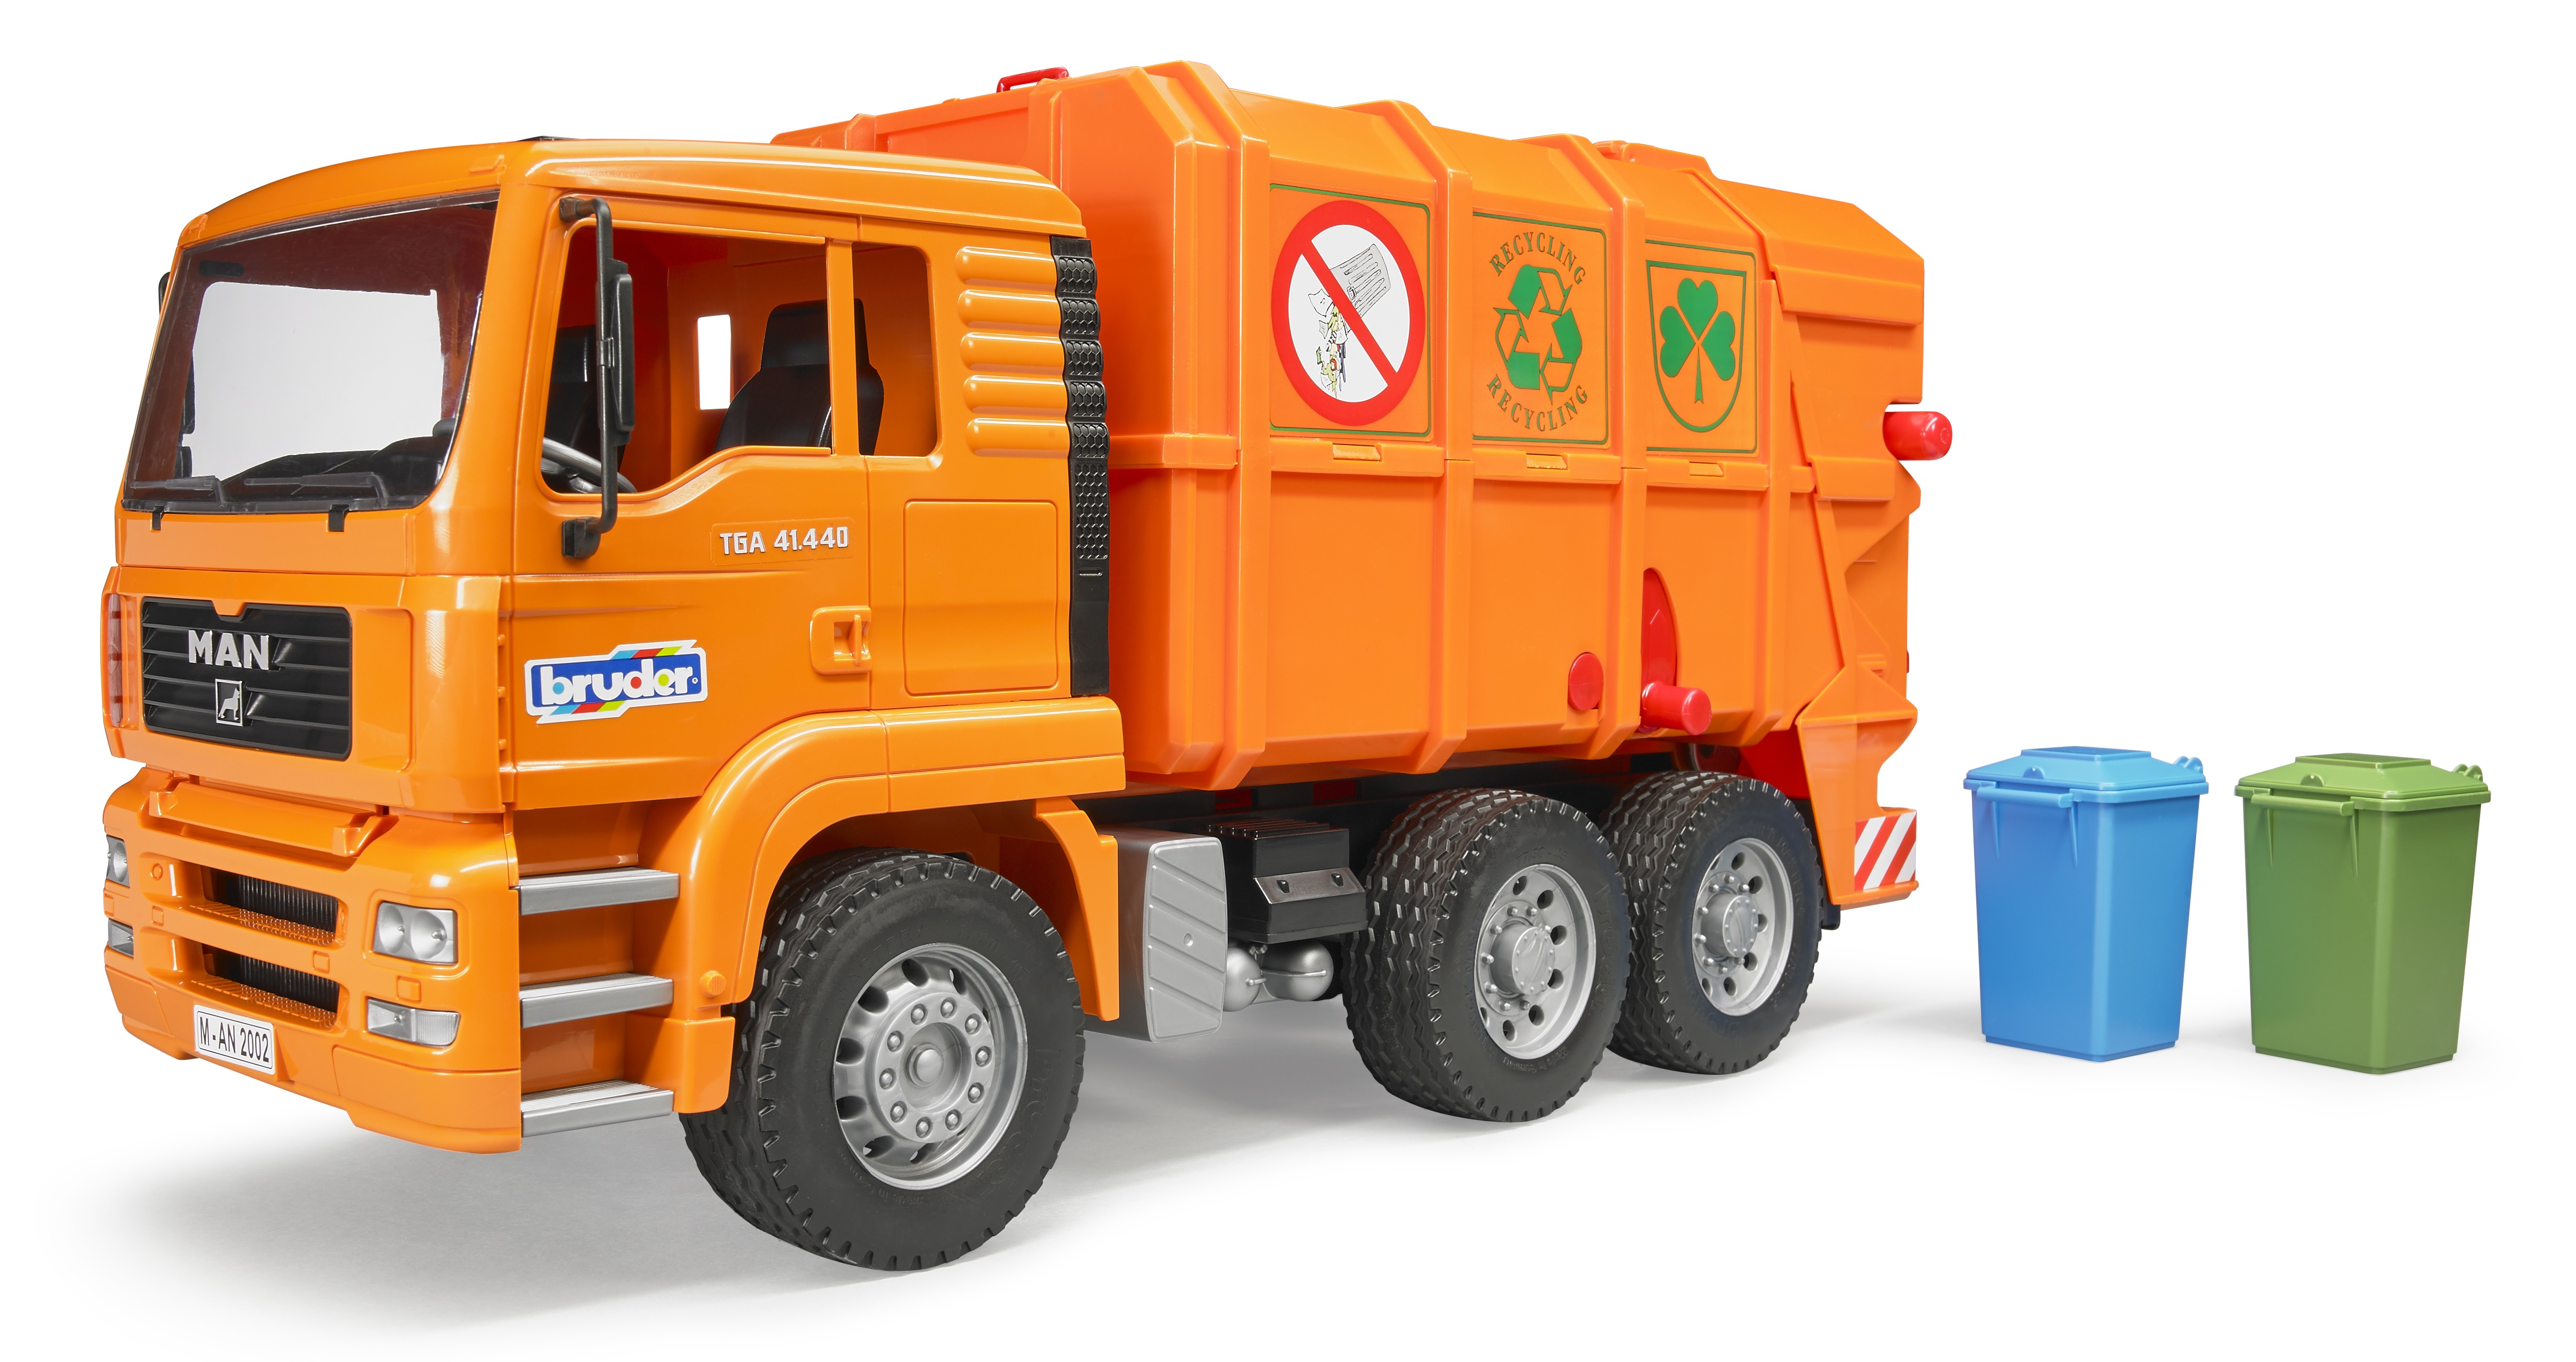 bruder toys garbage truck